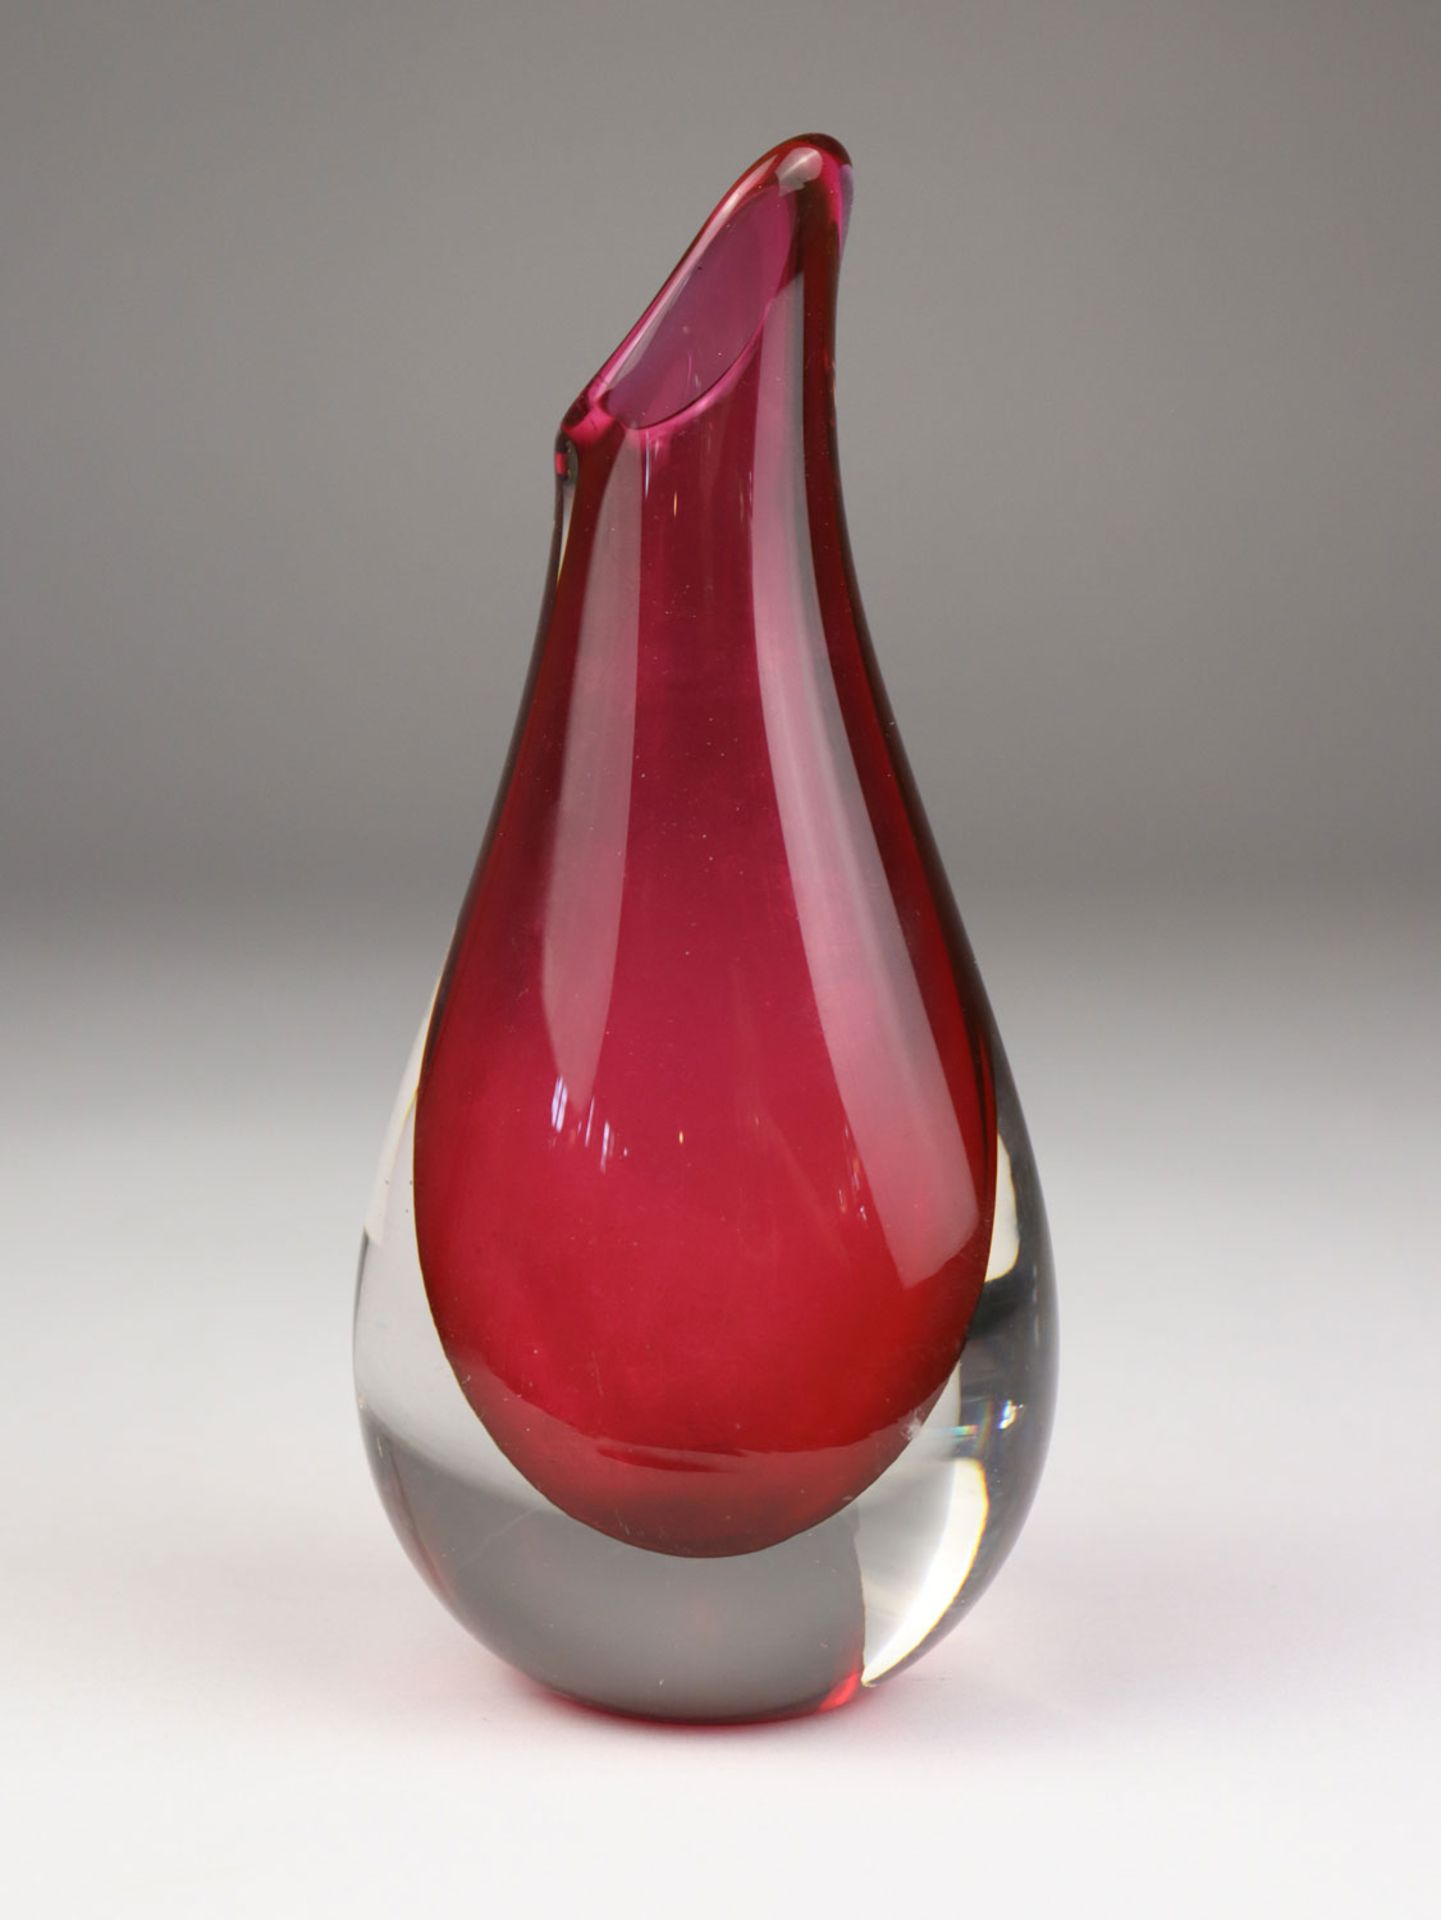 Seguso - Vase - Image 2 of 4